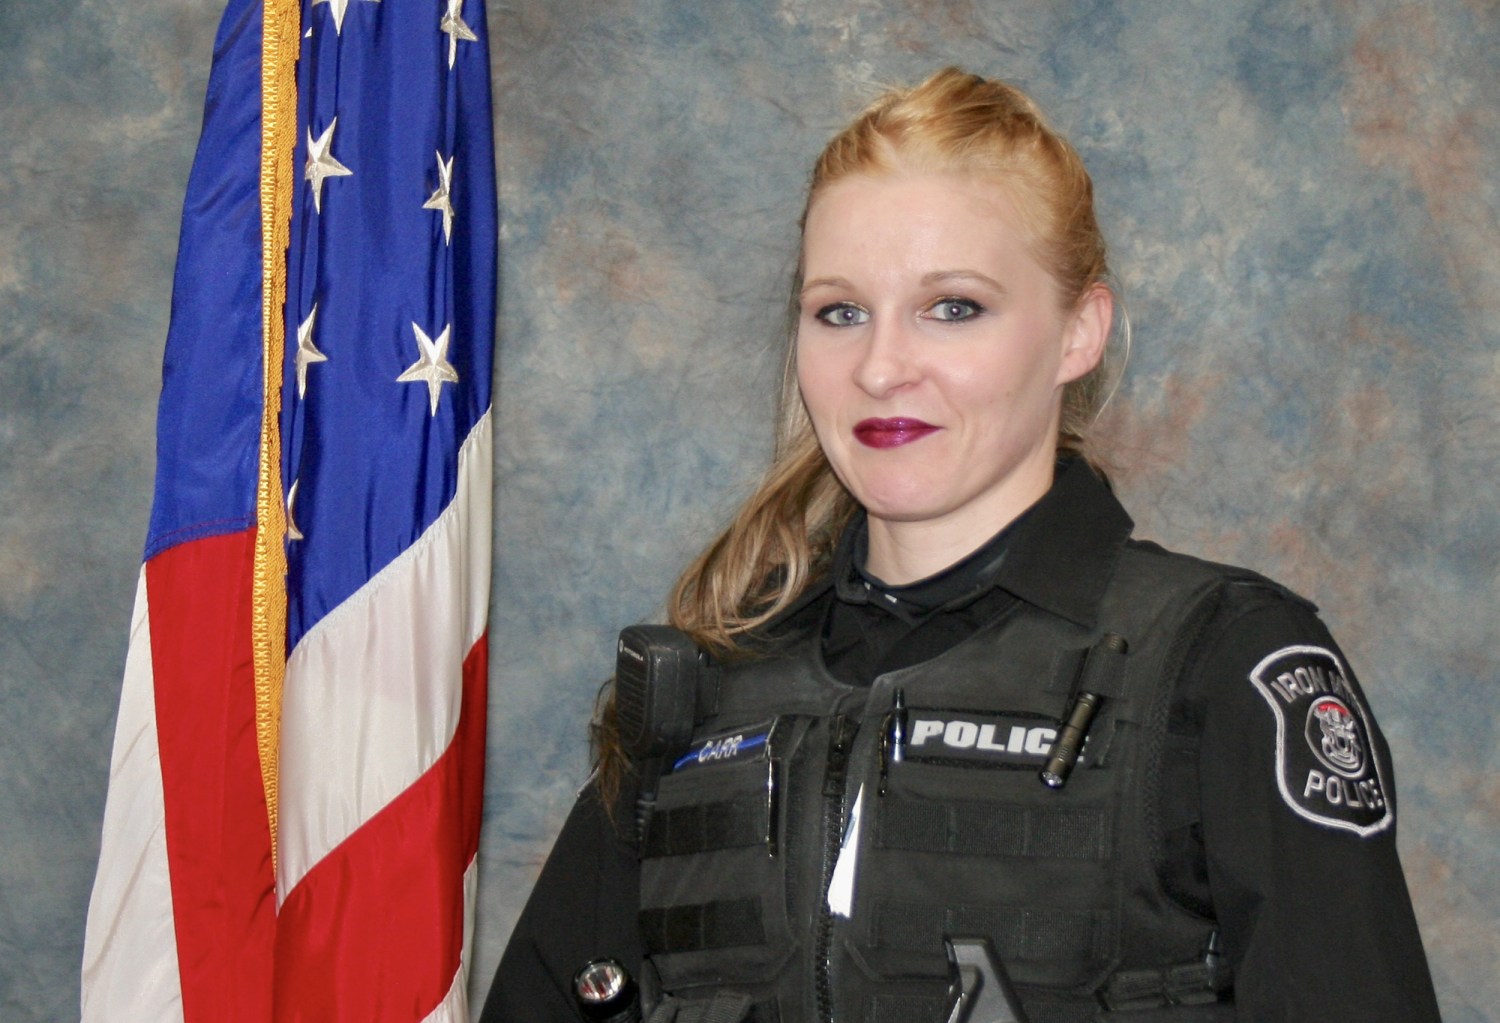 Michigan departments first female cop alleges relentless harassment